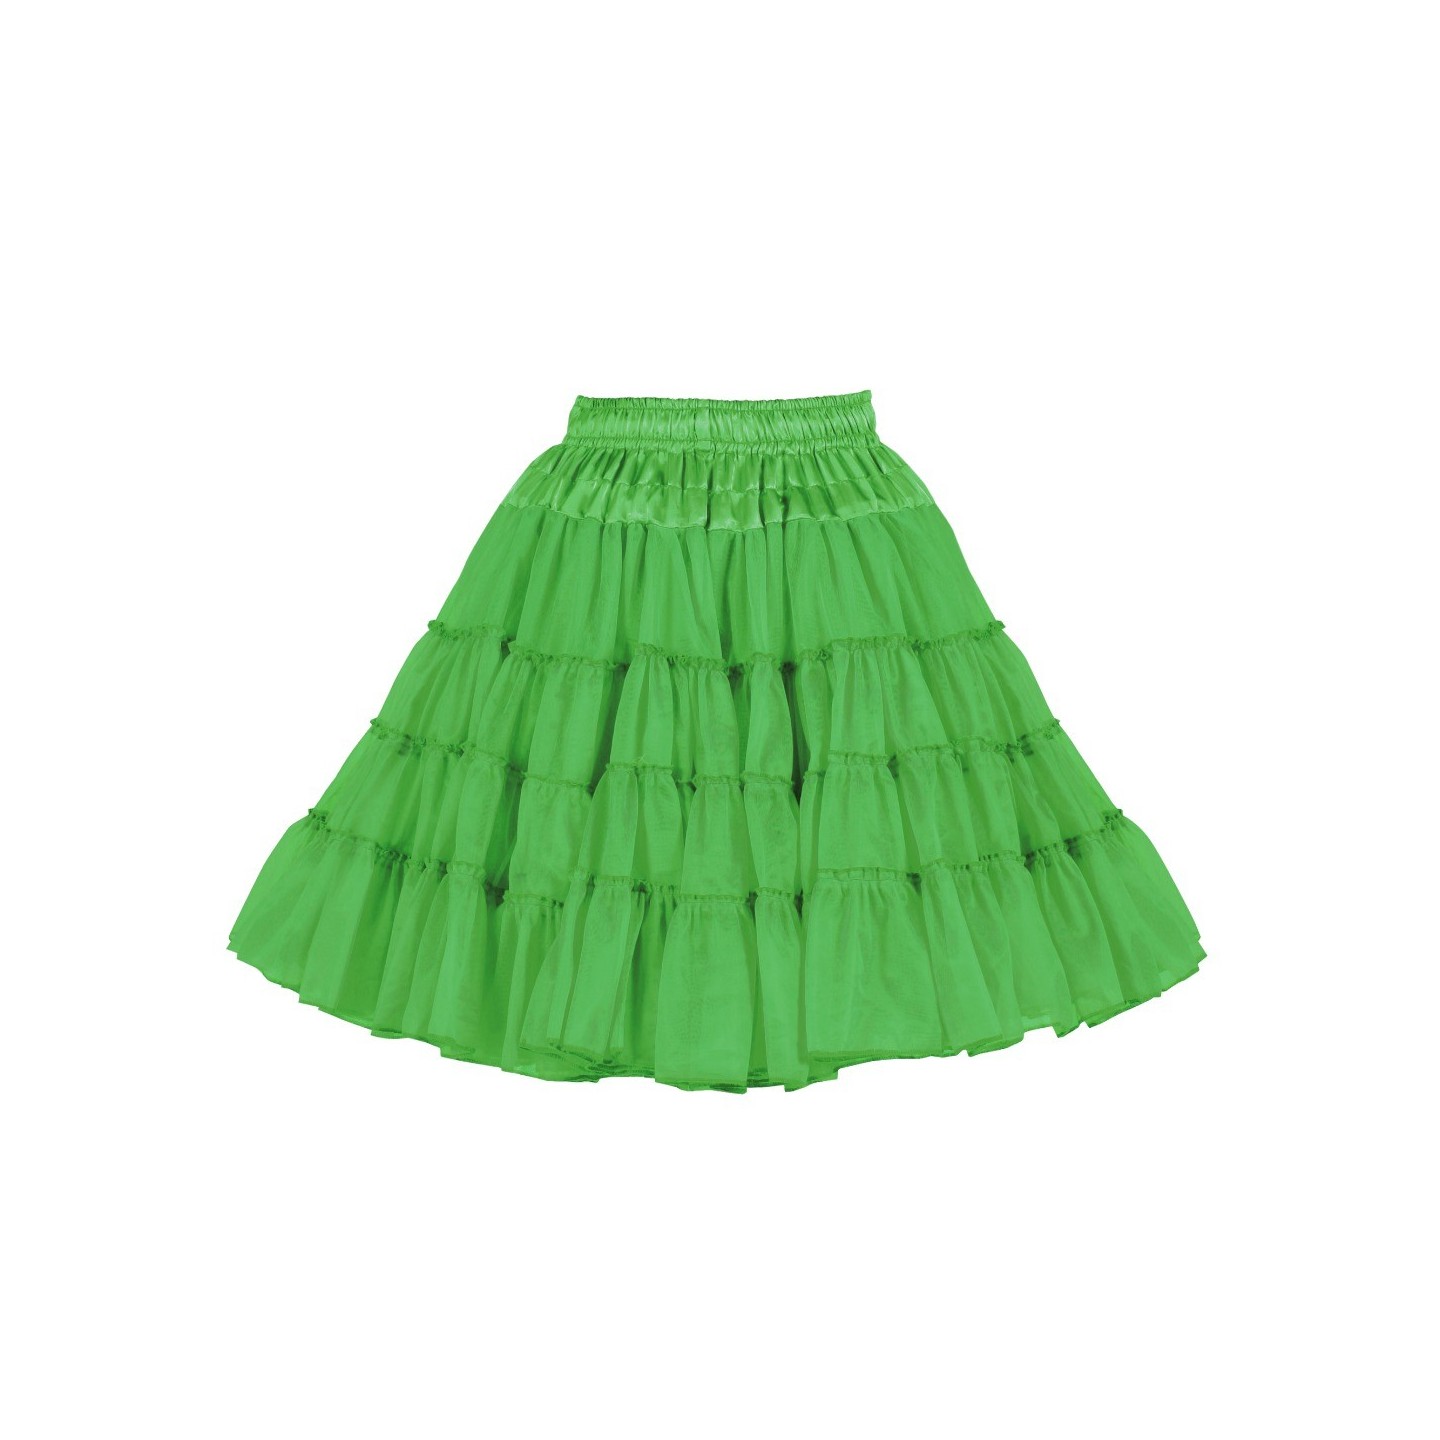 groene petticoat onderrok dames rok